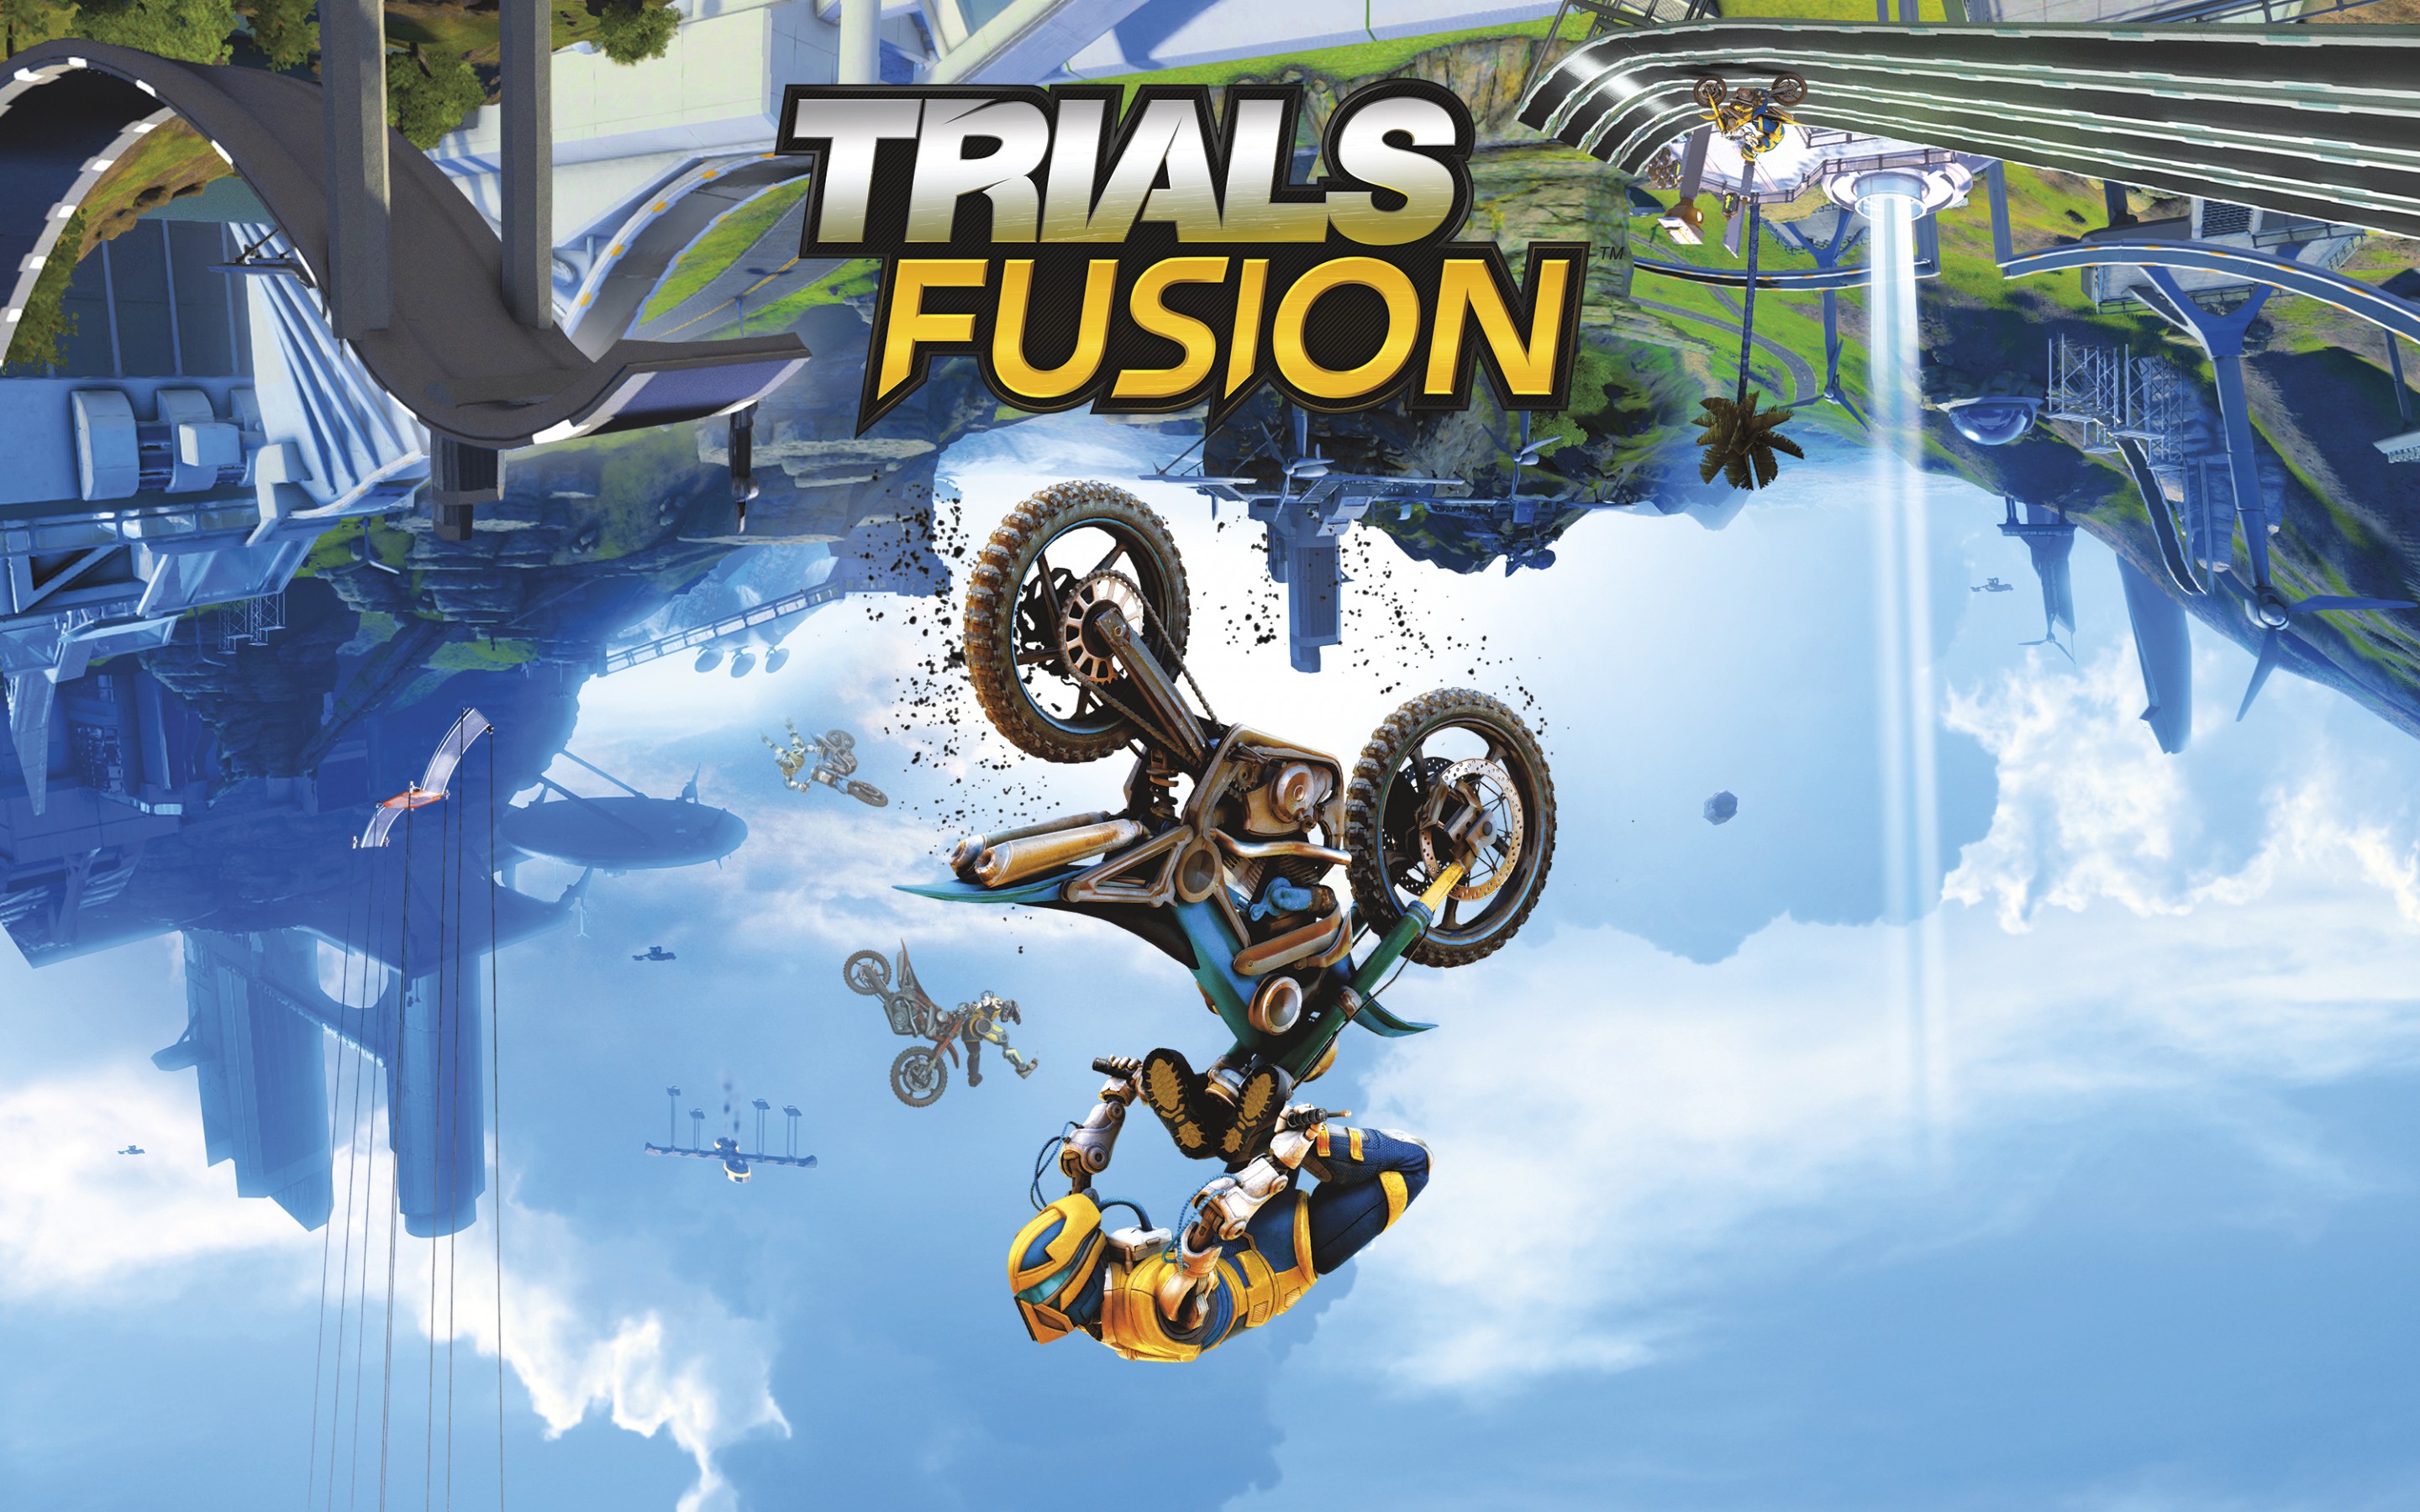 “Trials Fusion” - Trial and a Few Errors